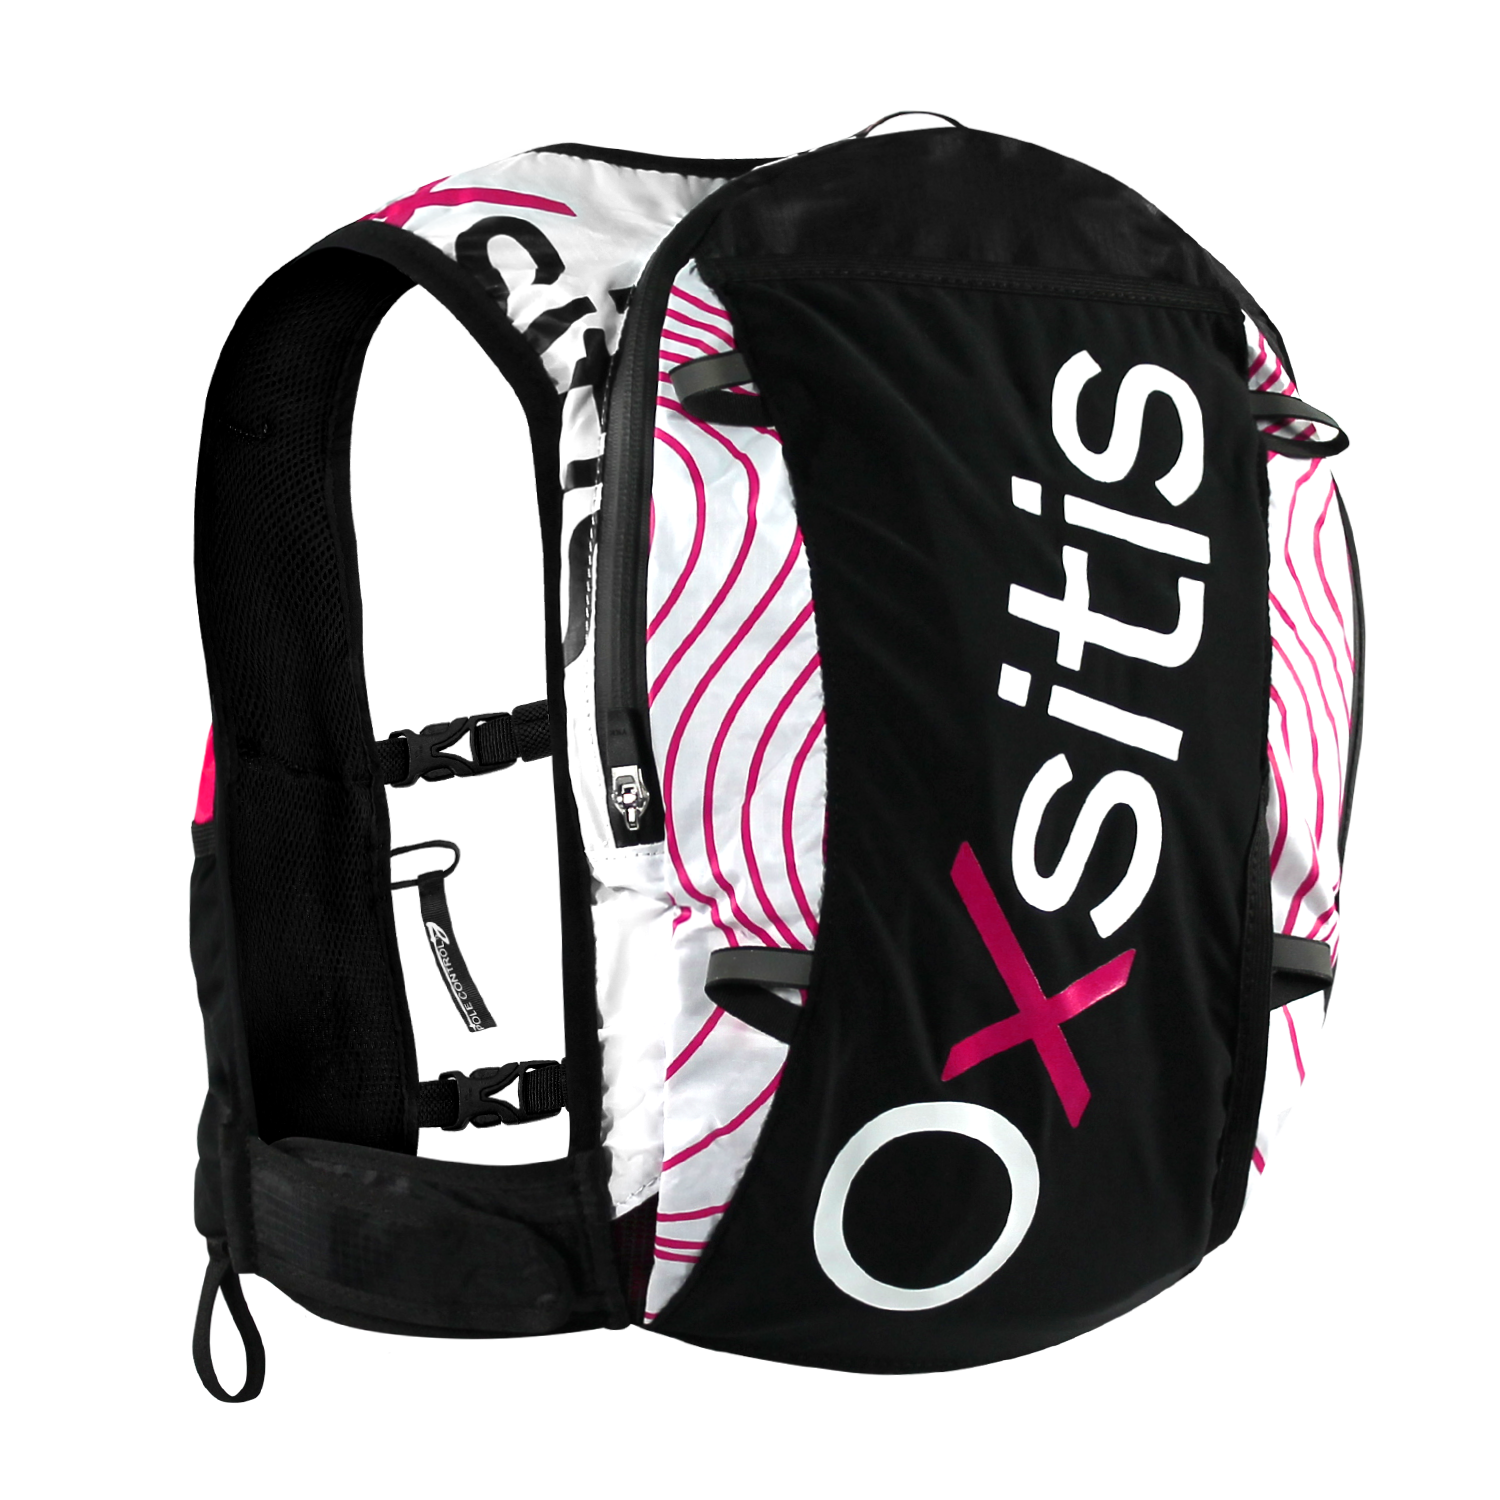 Oxsitis Pulse 12 - Laufrucksack - Damen